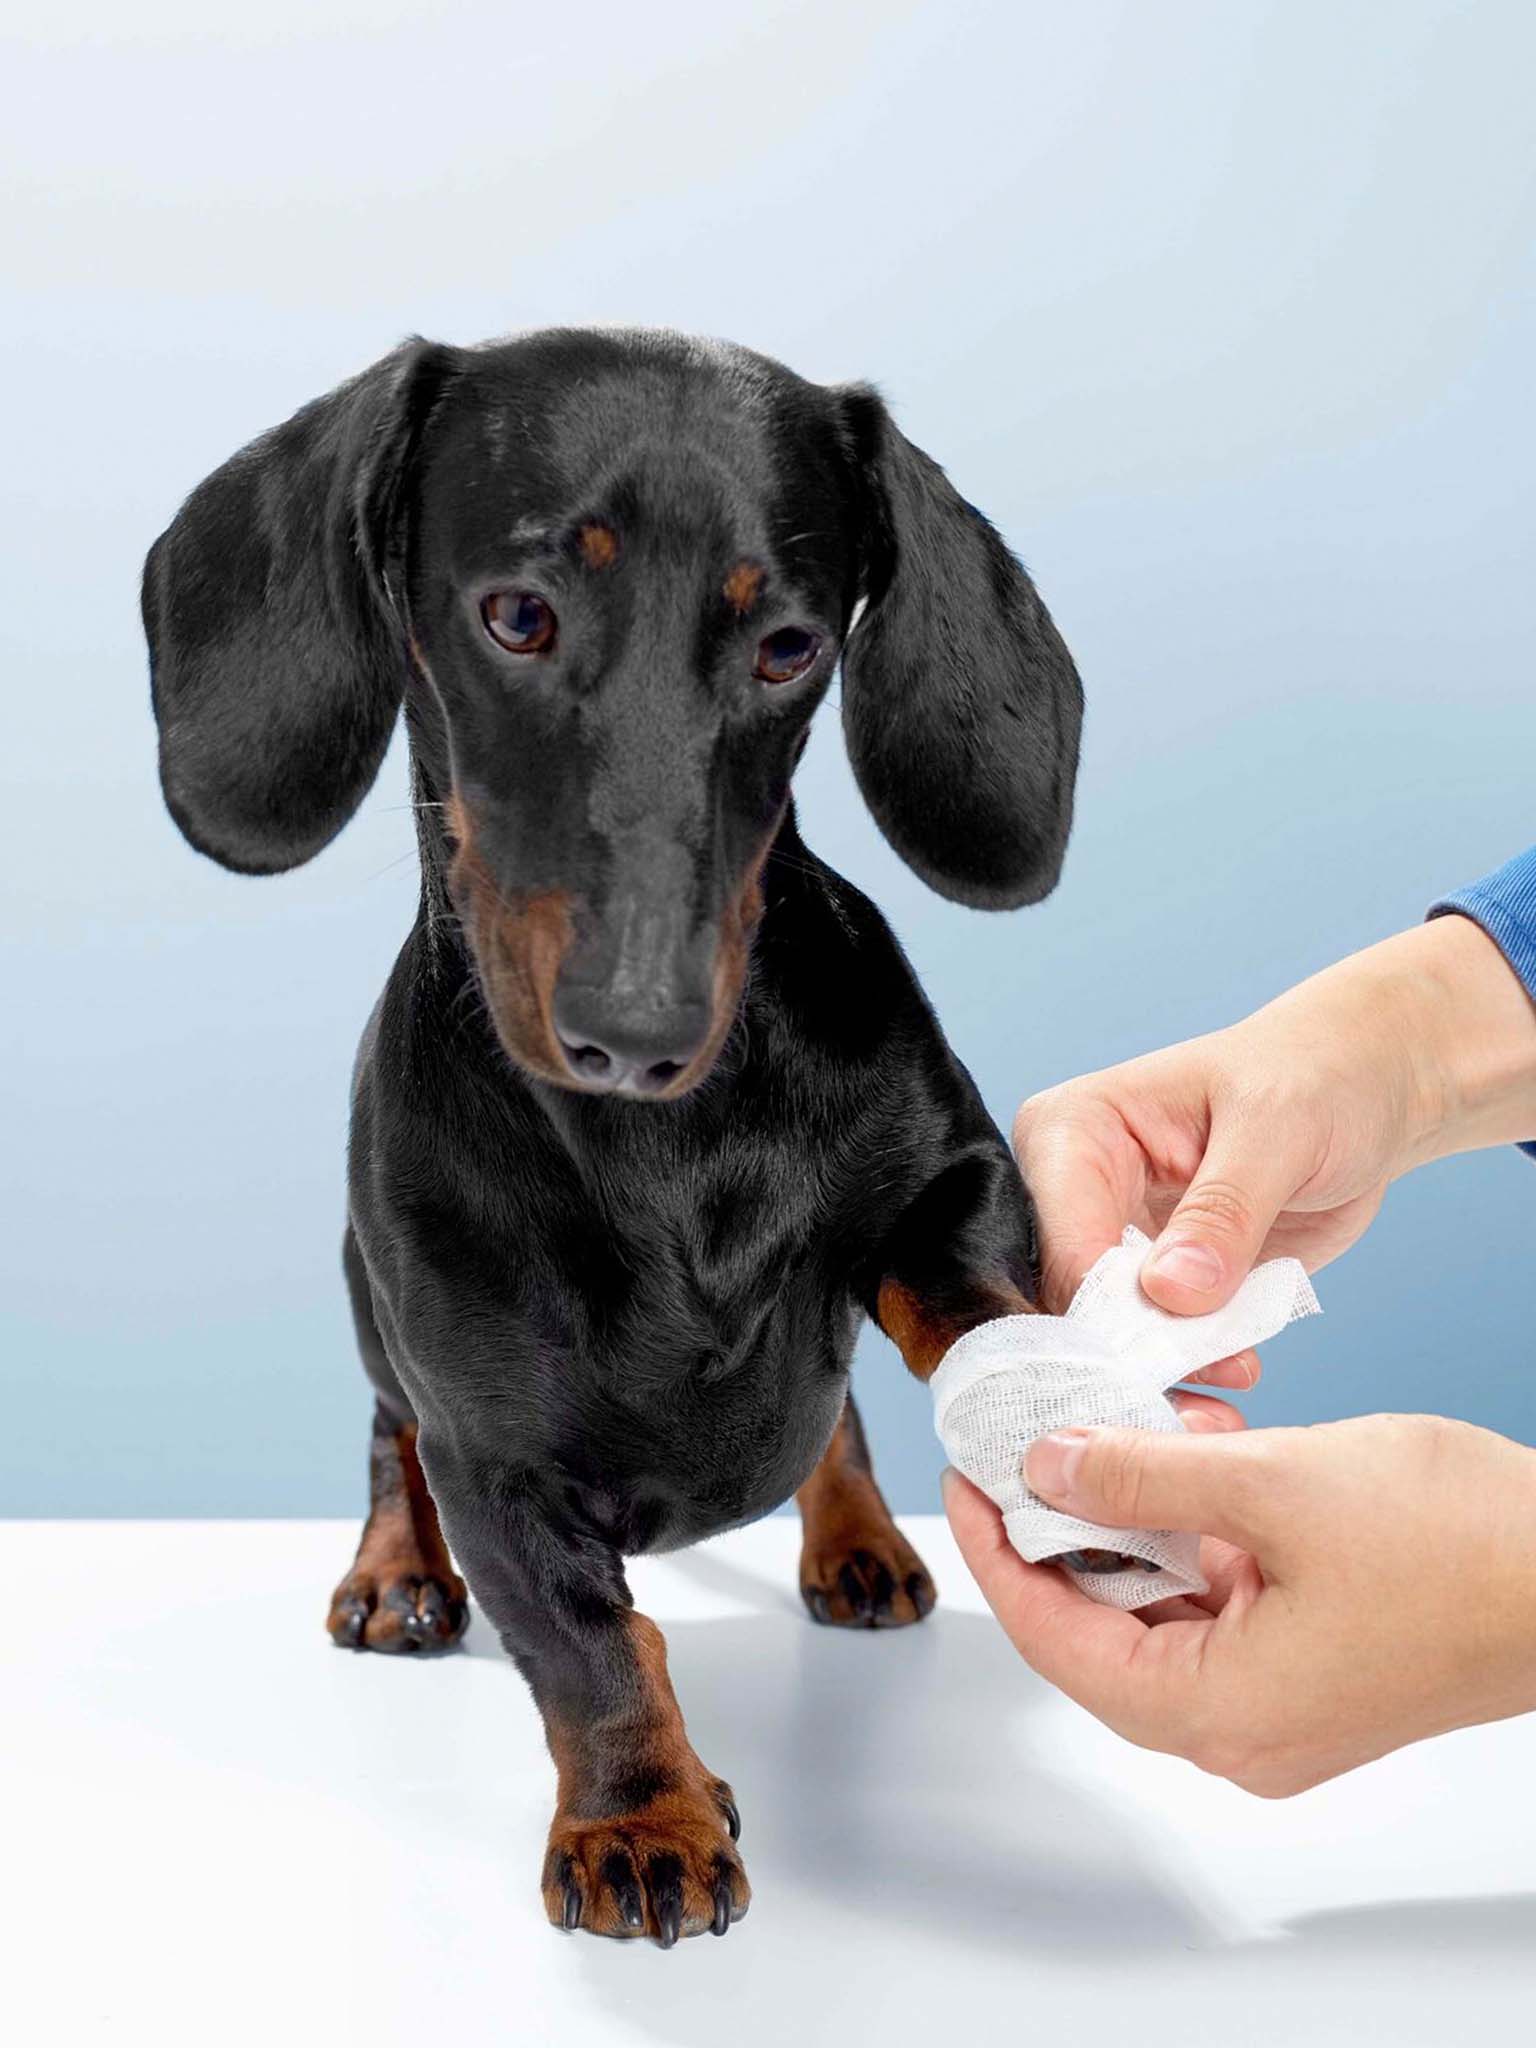 a dog getting a bandage